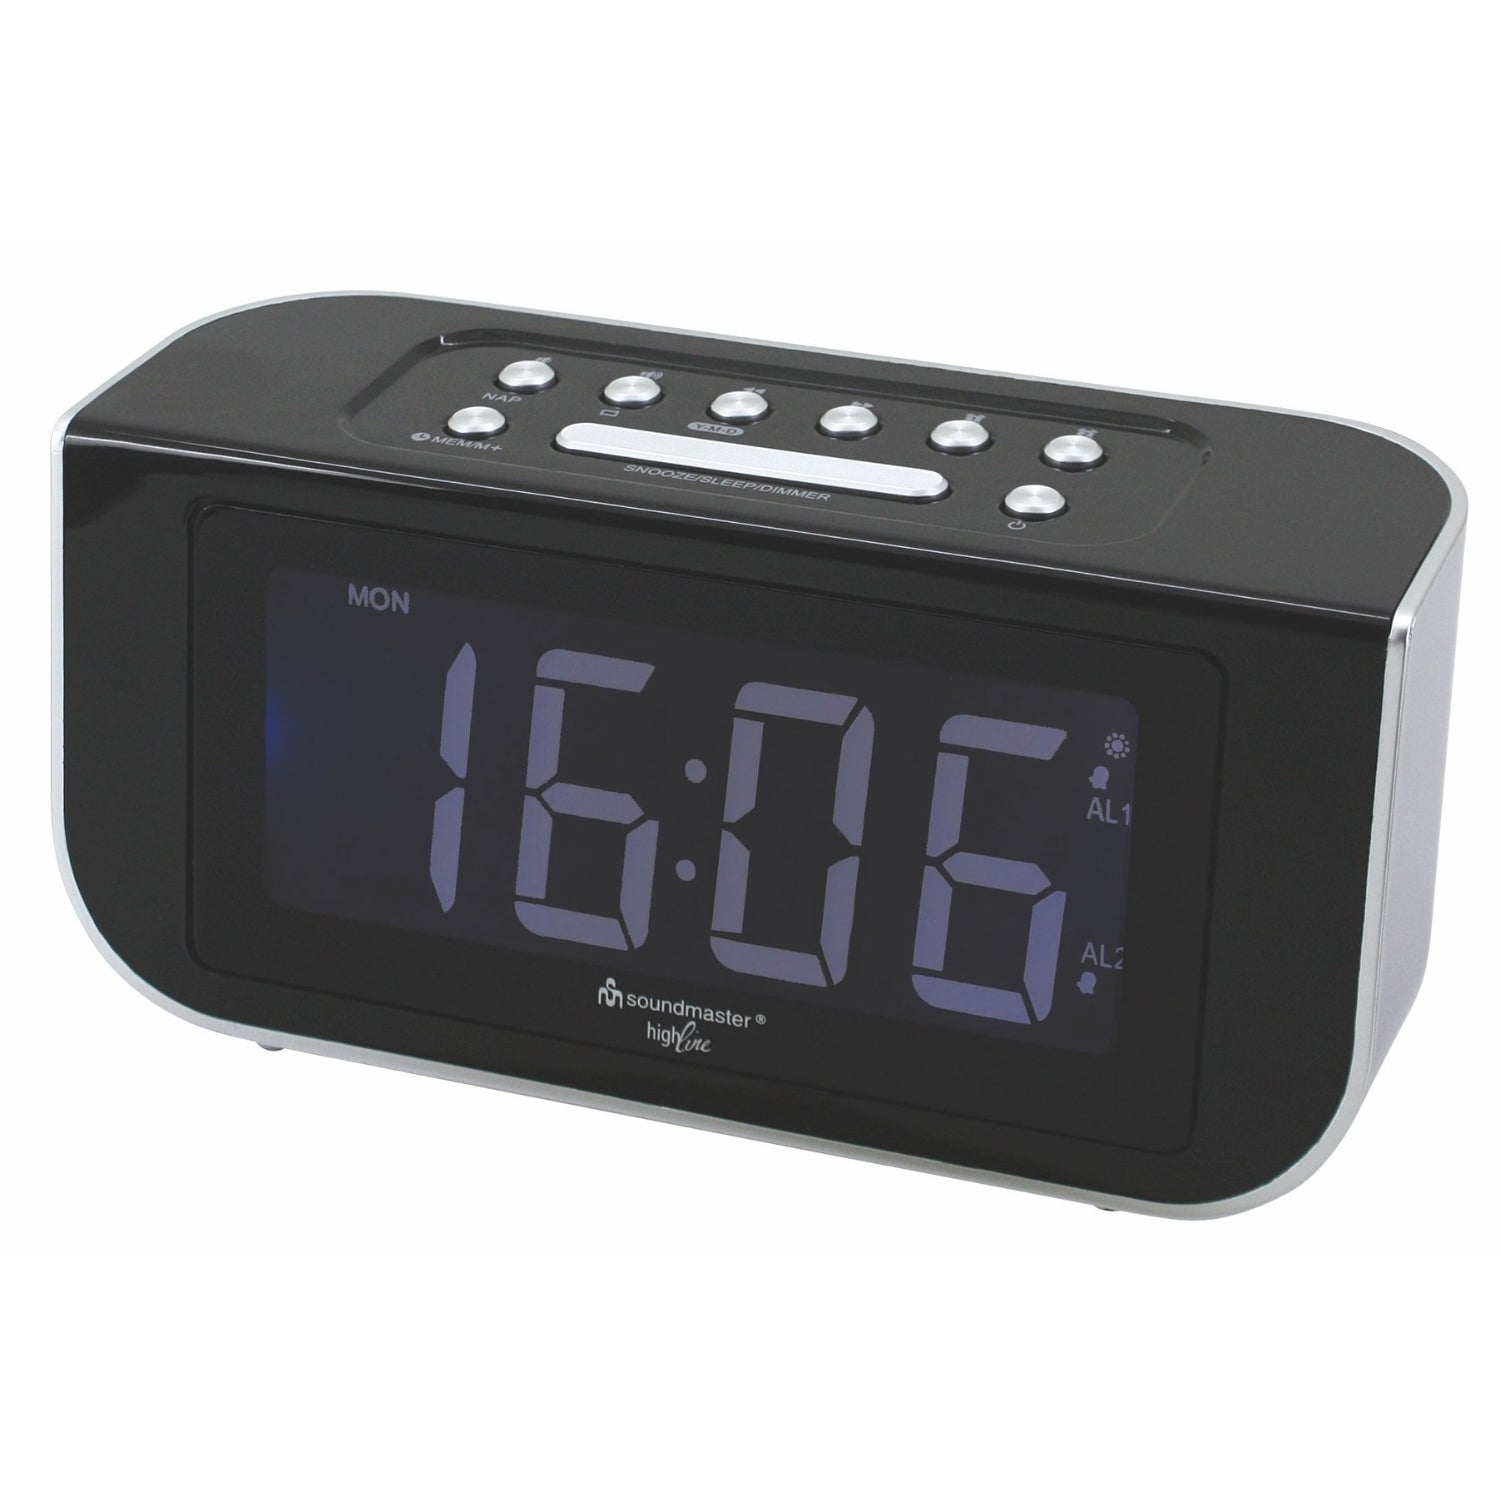 Soundmaster HighLine FUR4005 PLL FM radio alarm clock radio alarm clock, dual alarm, dimmable display